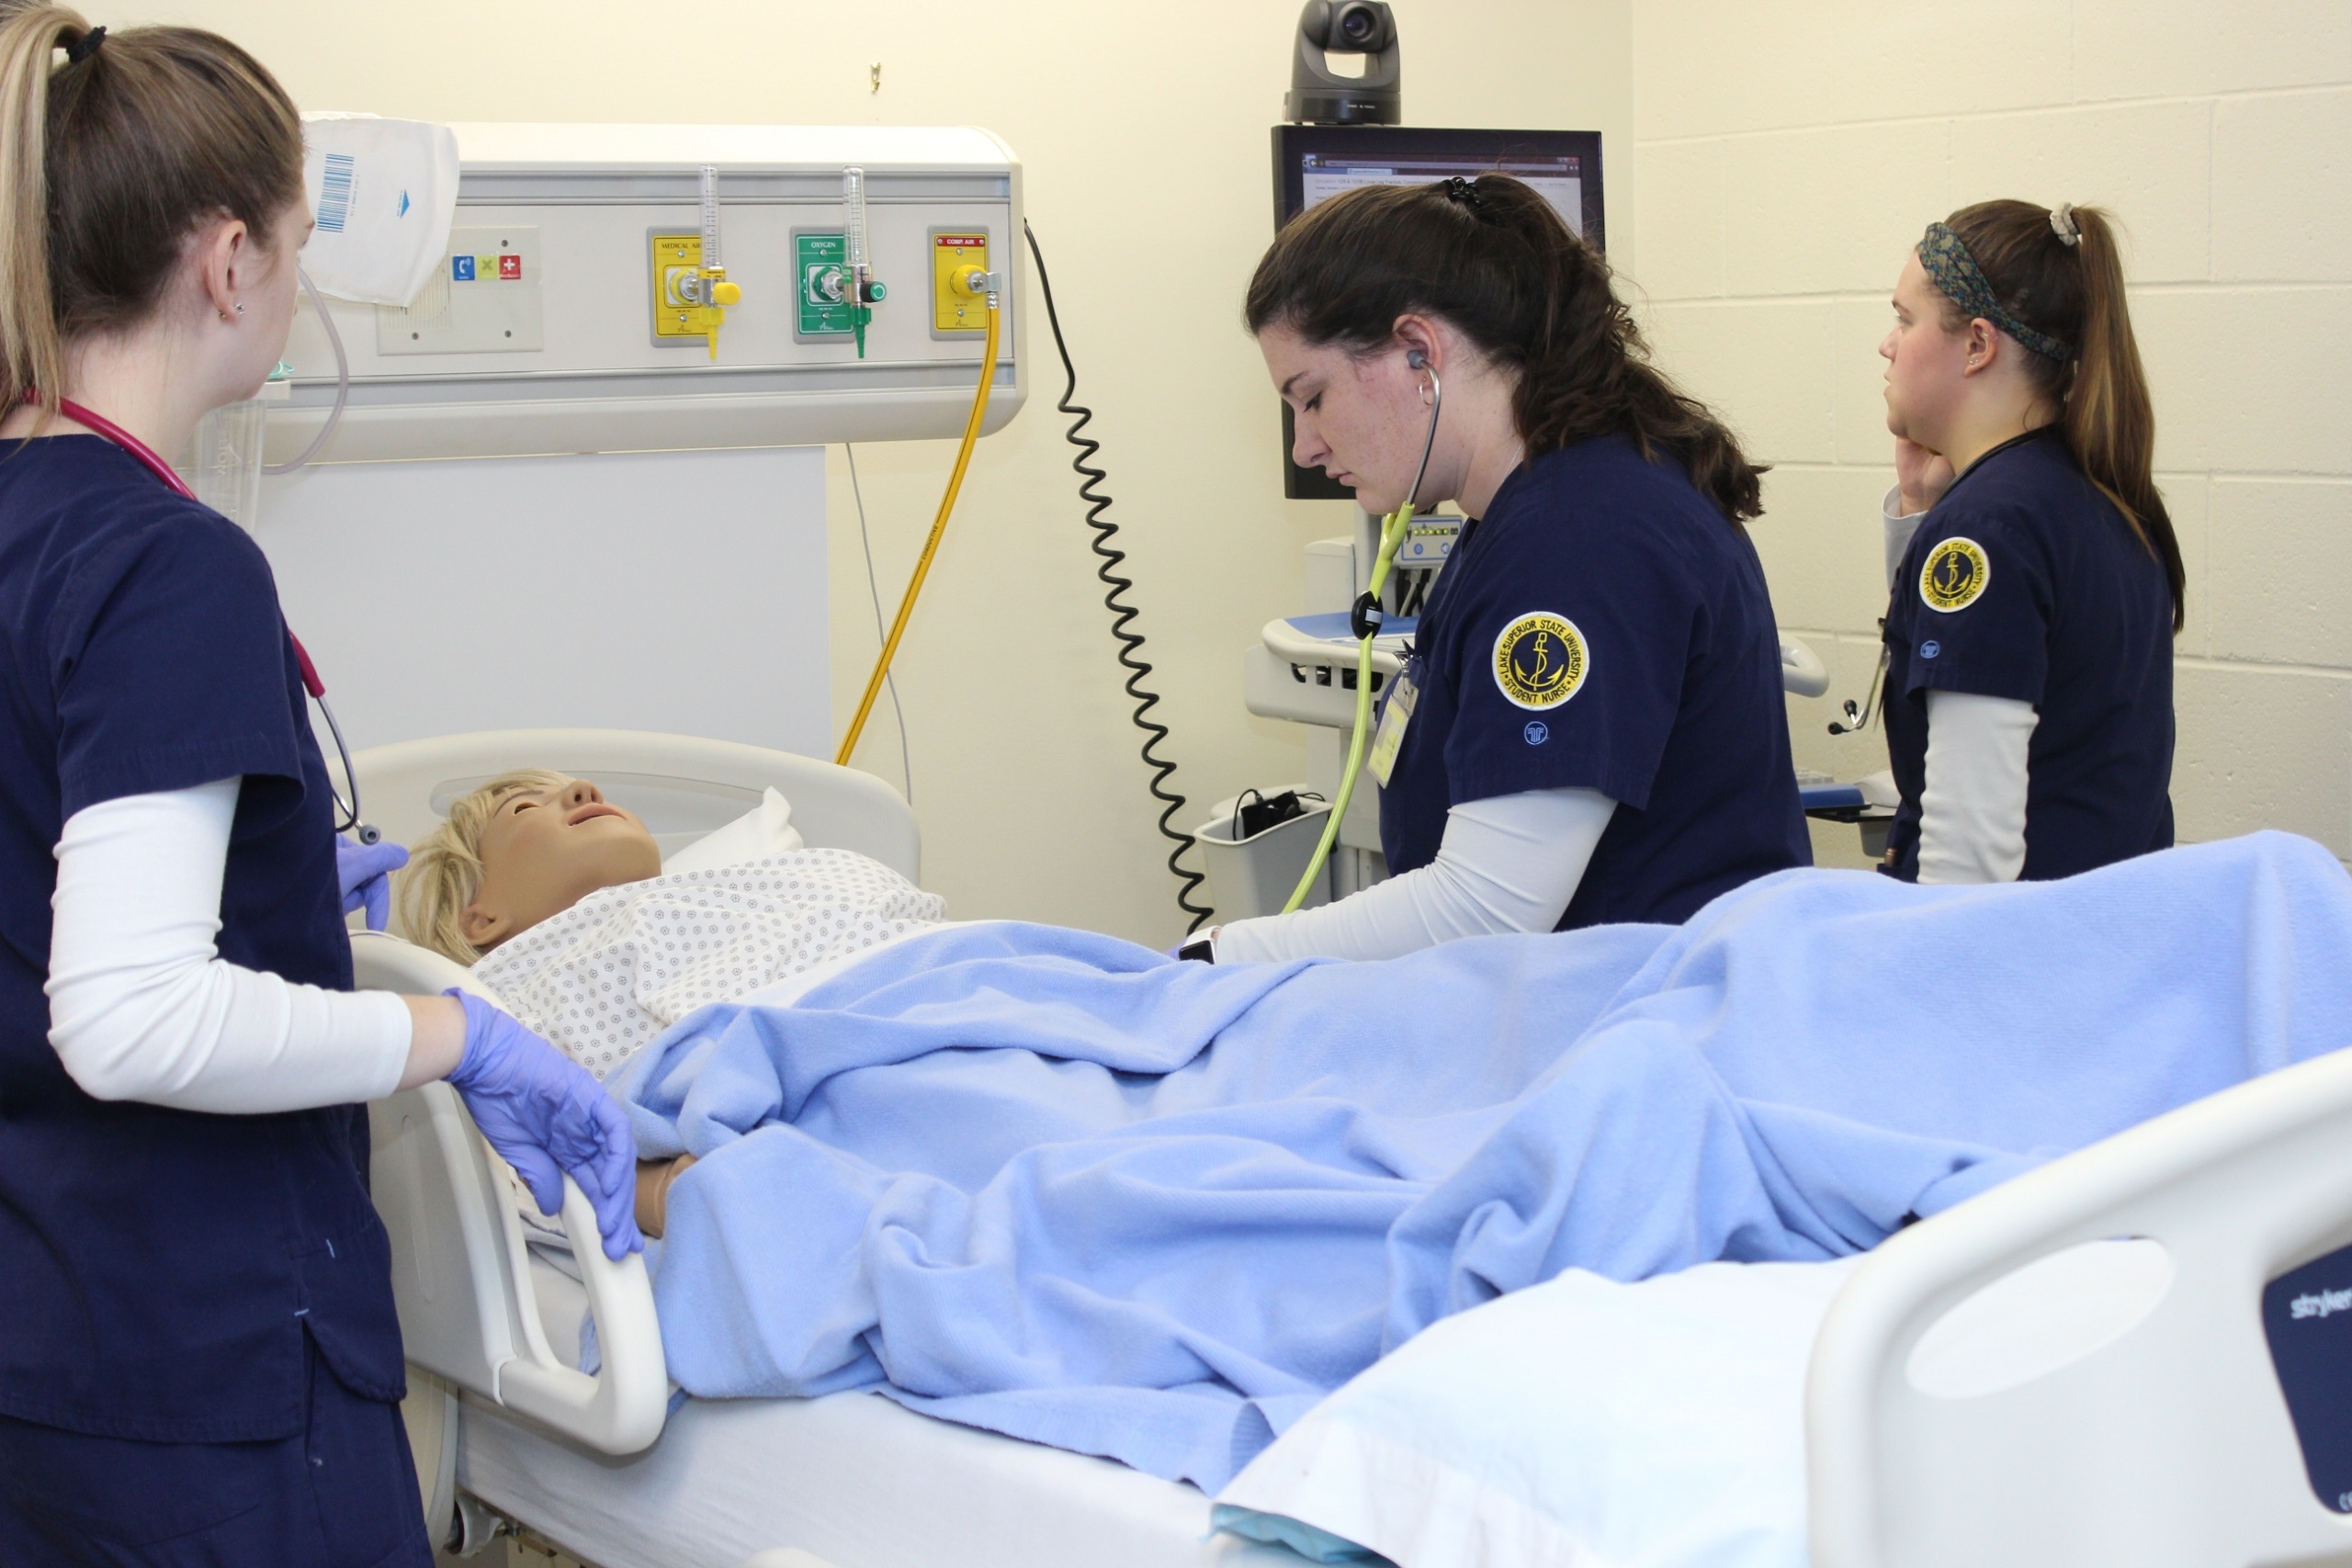 nursing students in simulation